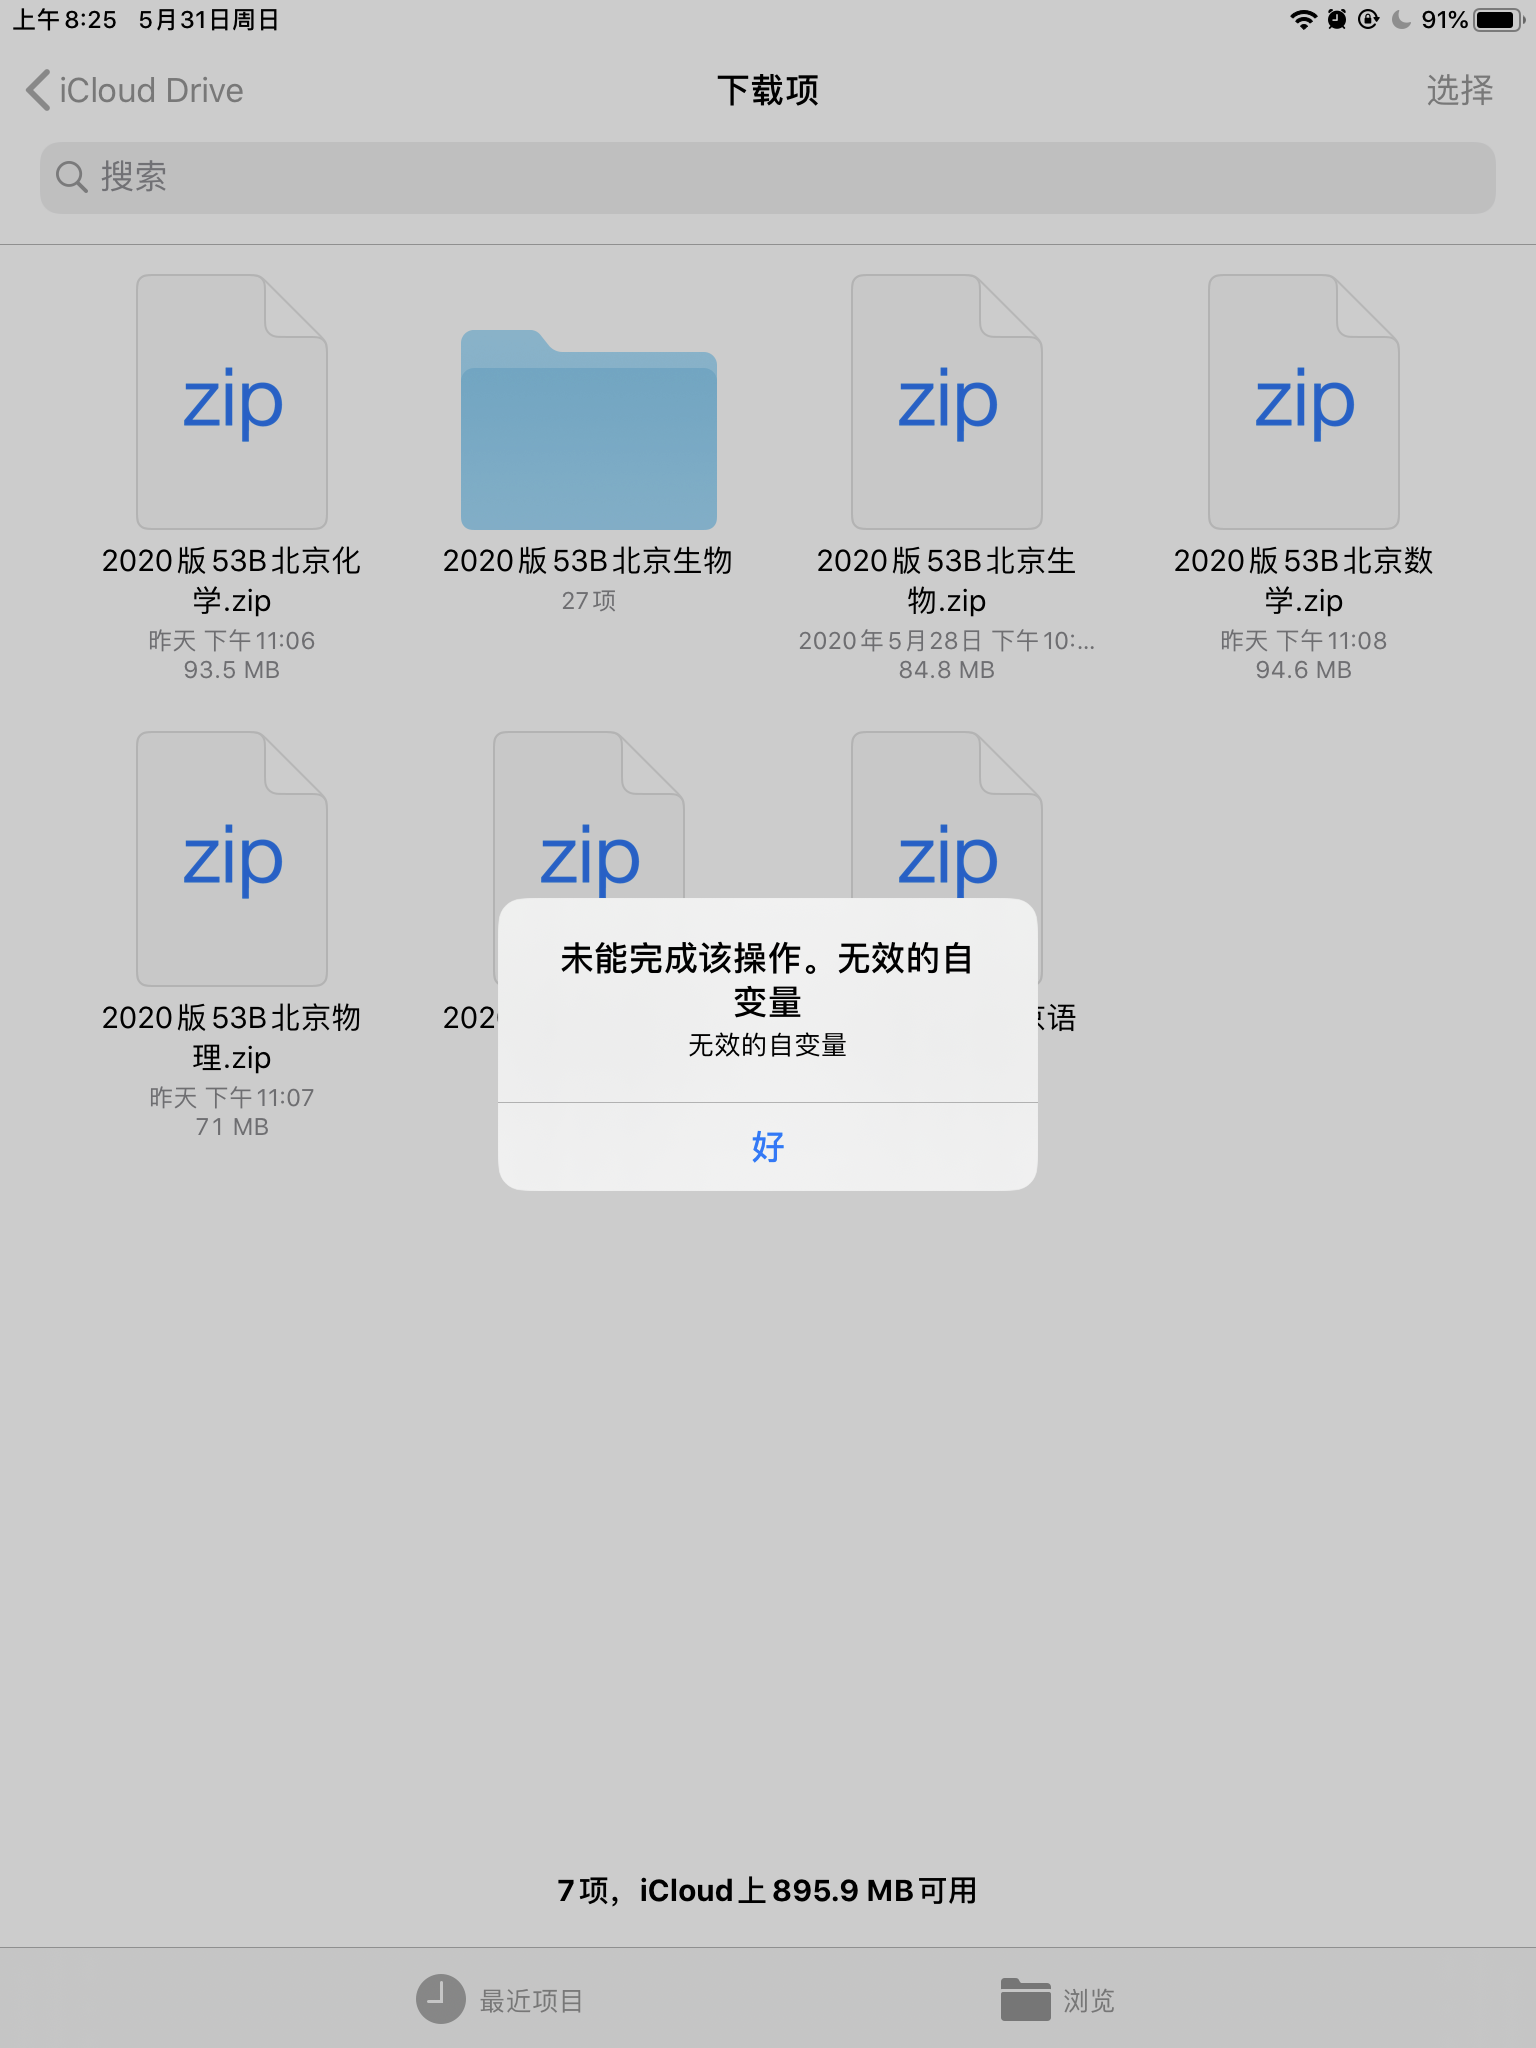 Zip文件无效自变量 Apple 社区